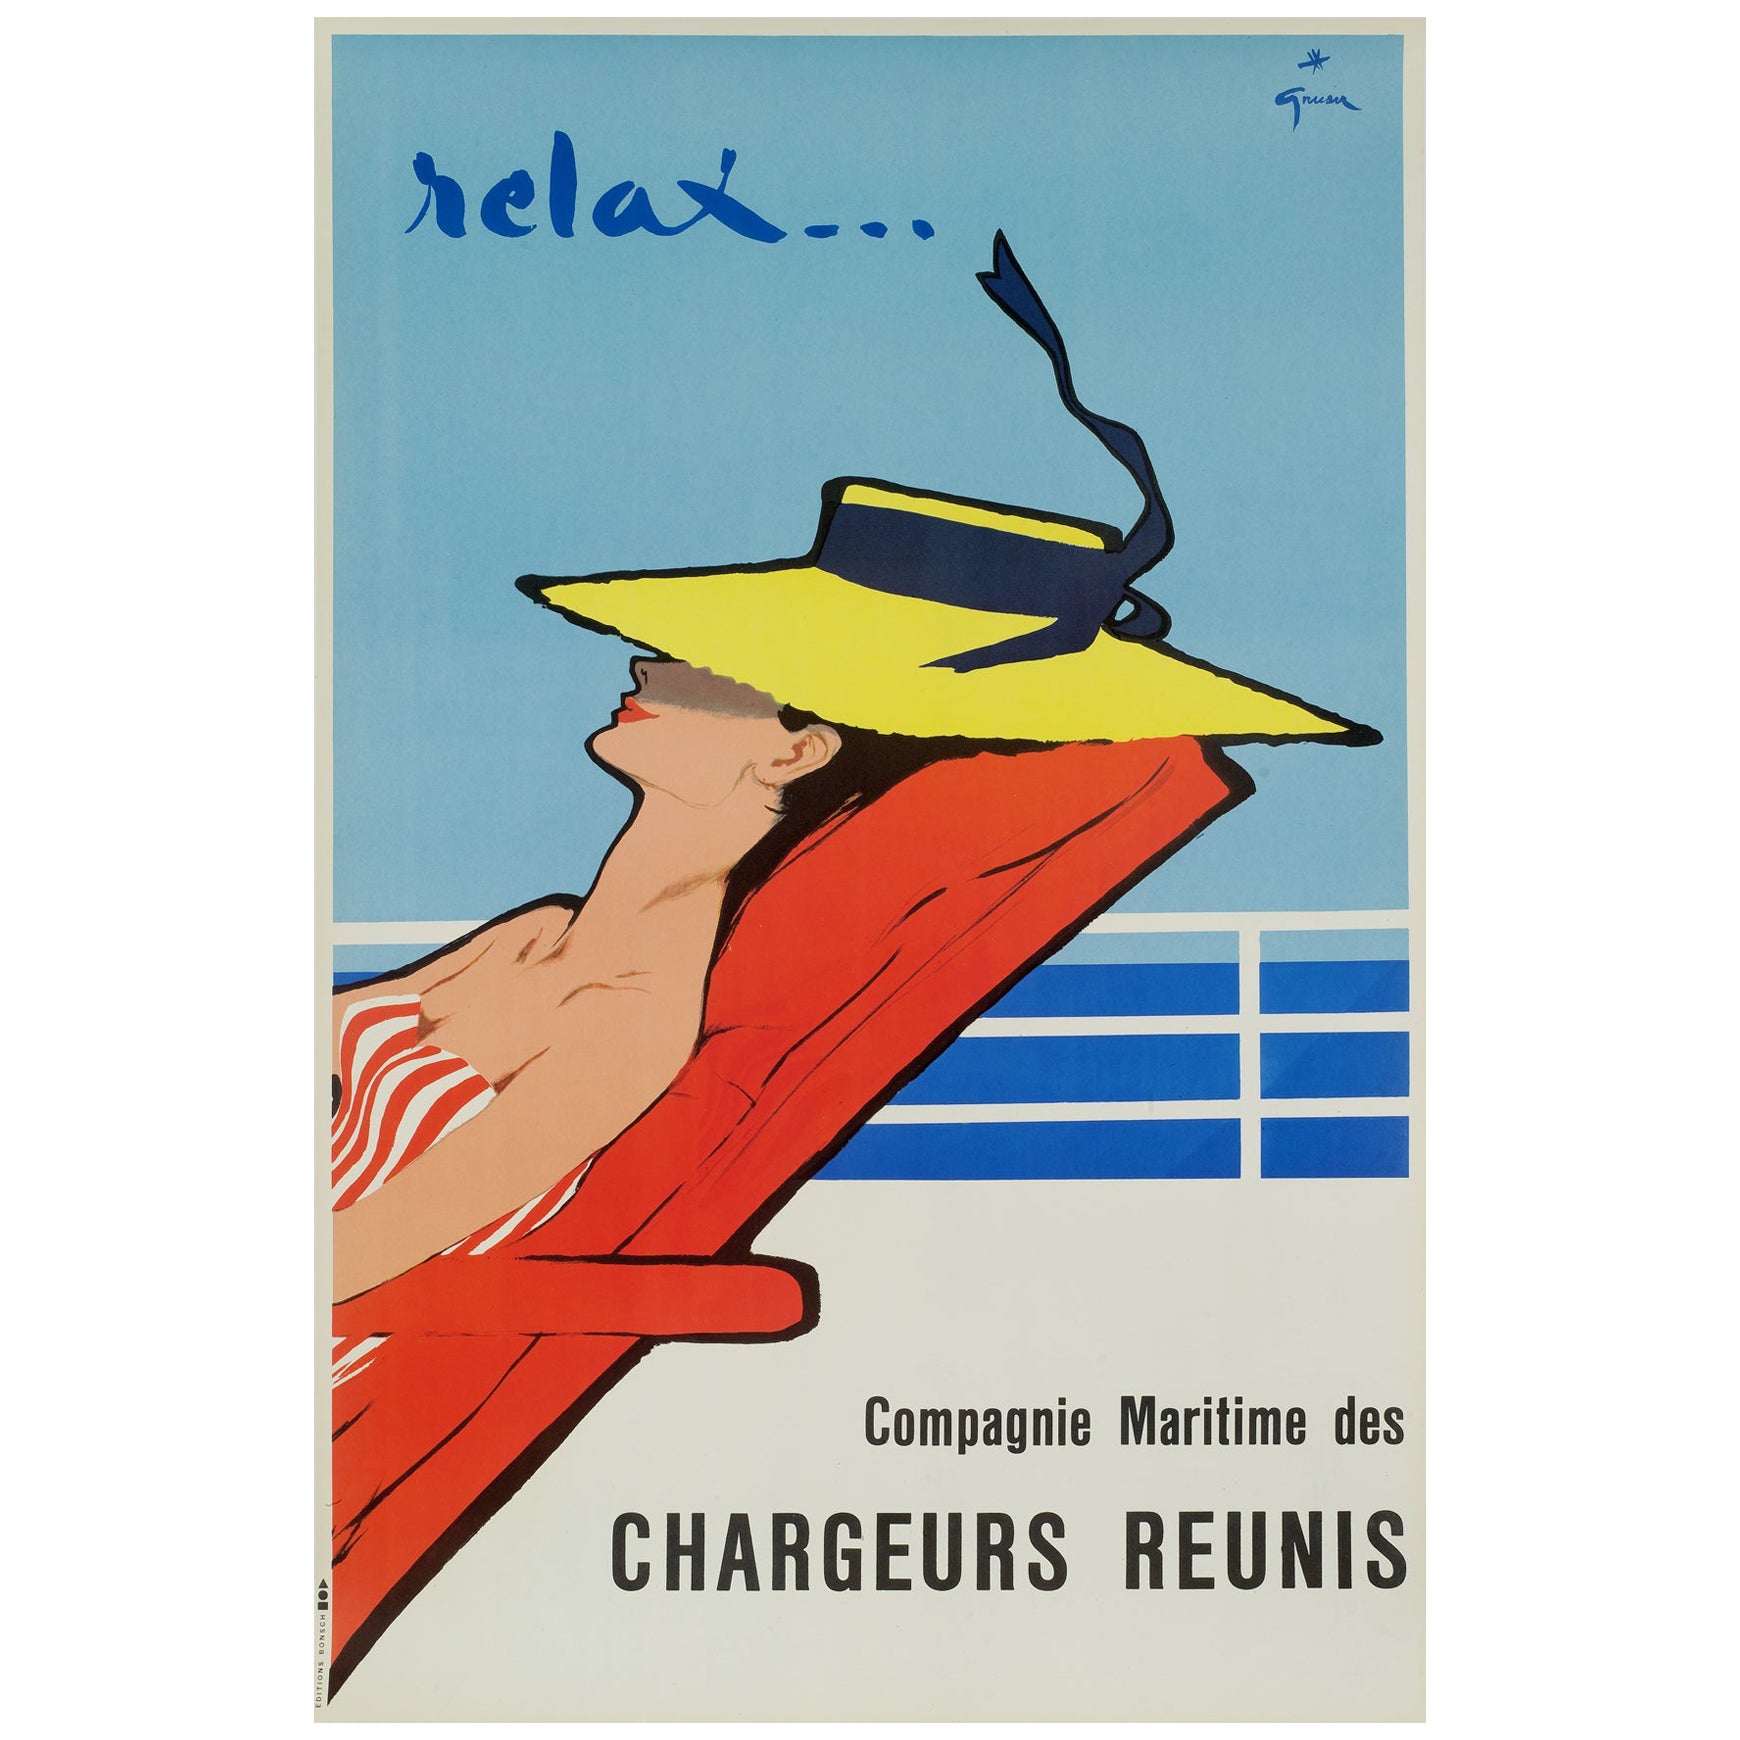 Gruau, Original Vintage Poster, Relax, Chargeurs Reunis, Boat, Ship, Woman 1954